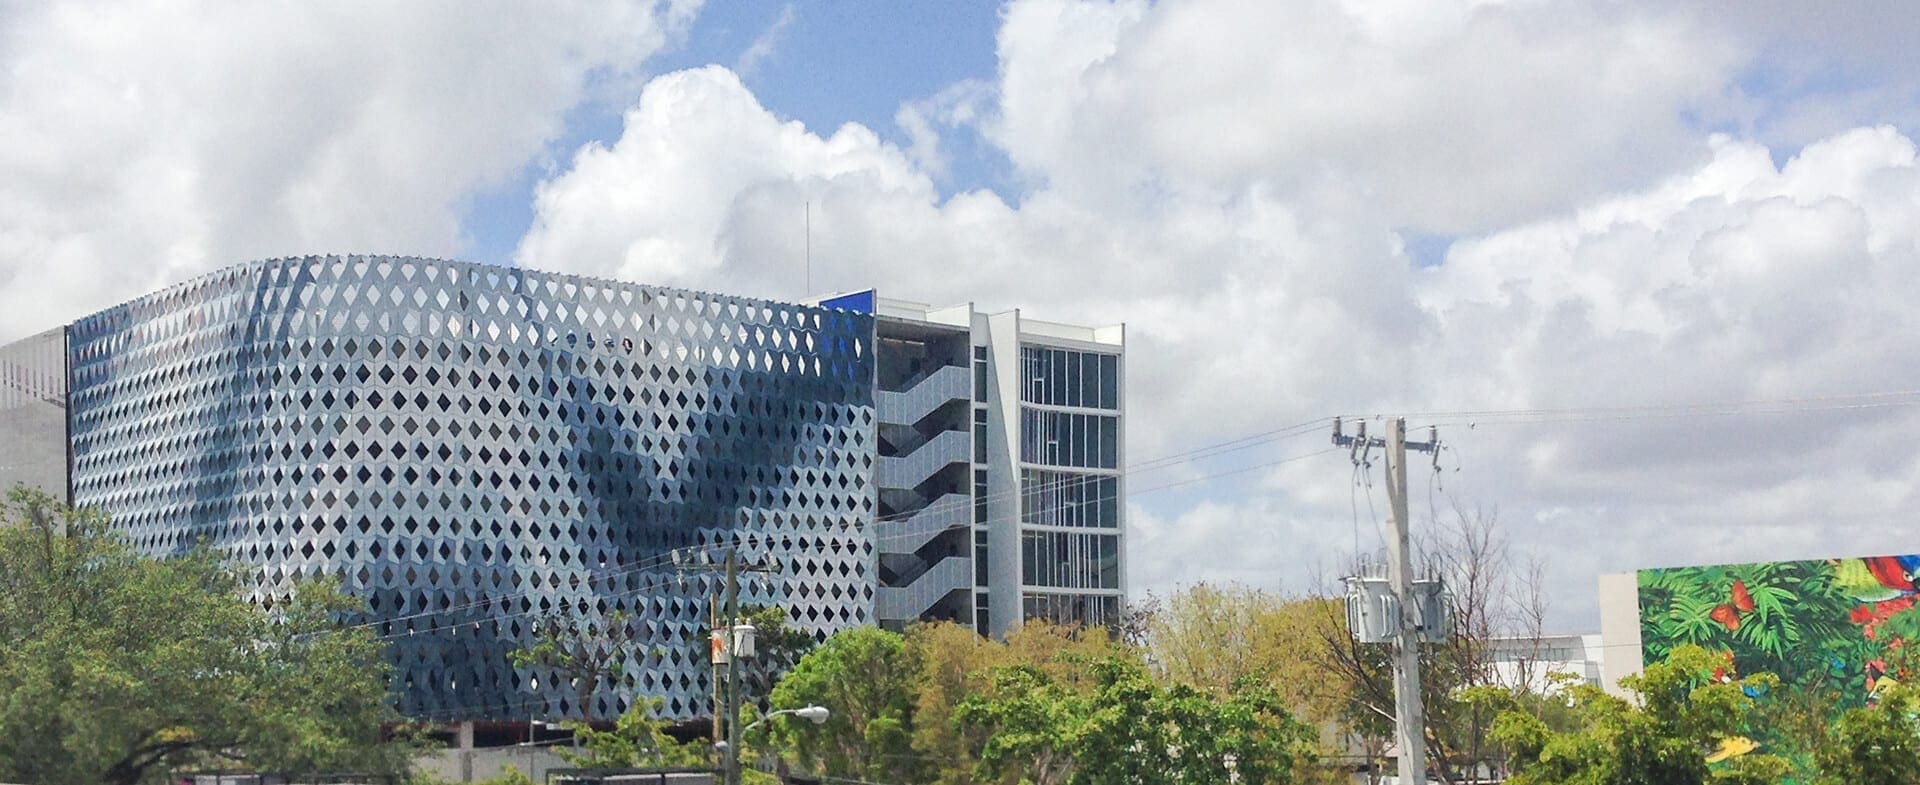 Photo of the IwamotoScott Facade for the Miami Design District City View Garage